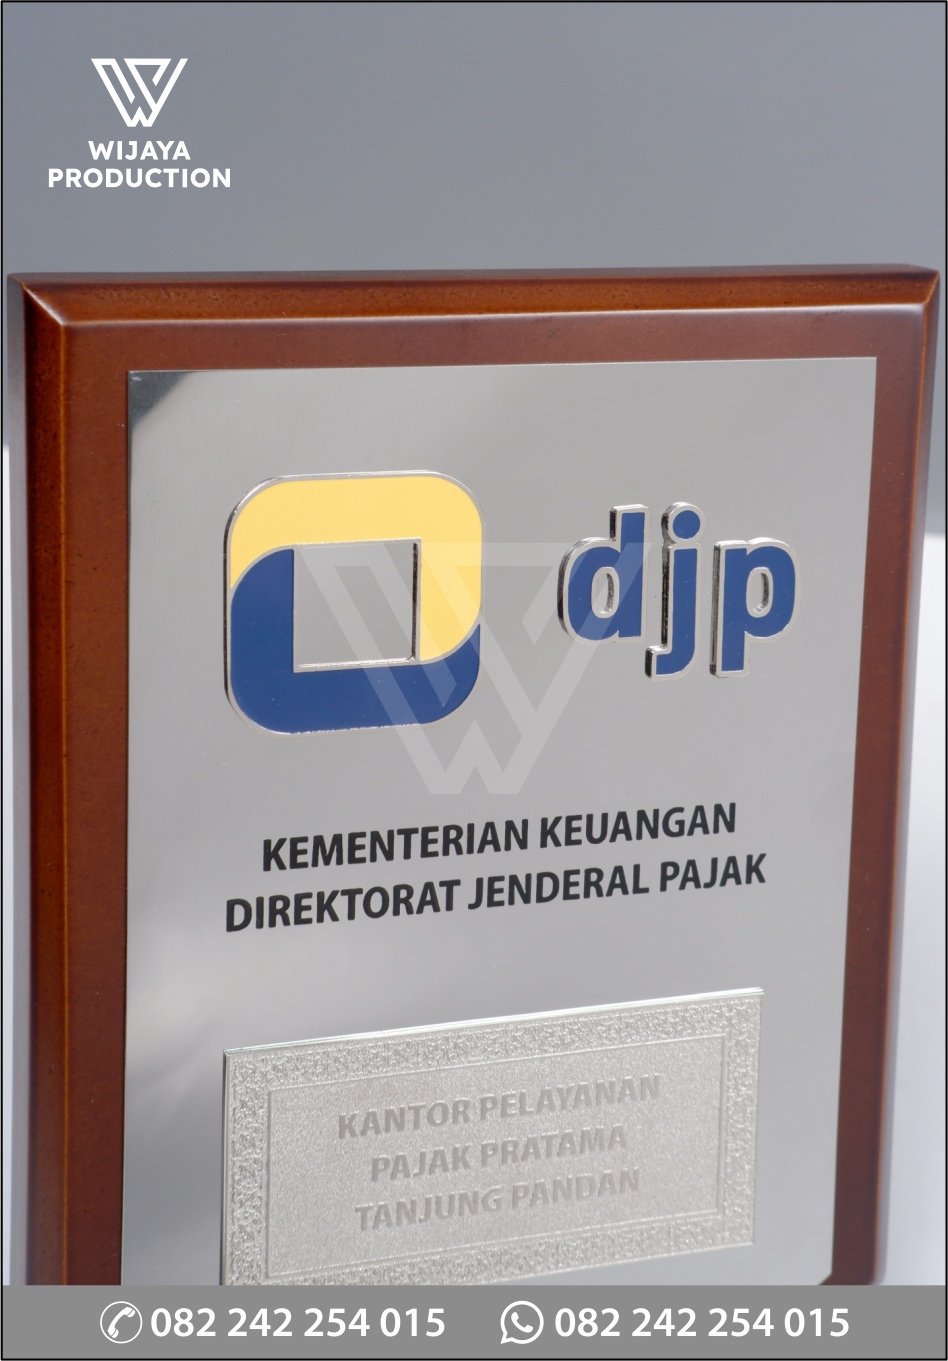 Detail Plakat Kayu Kementerian Keuangan DJP